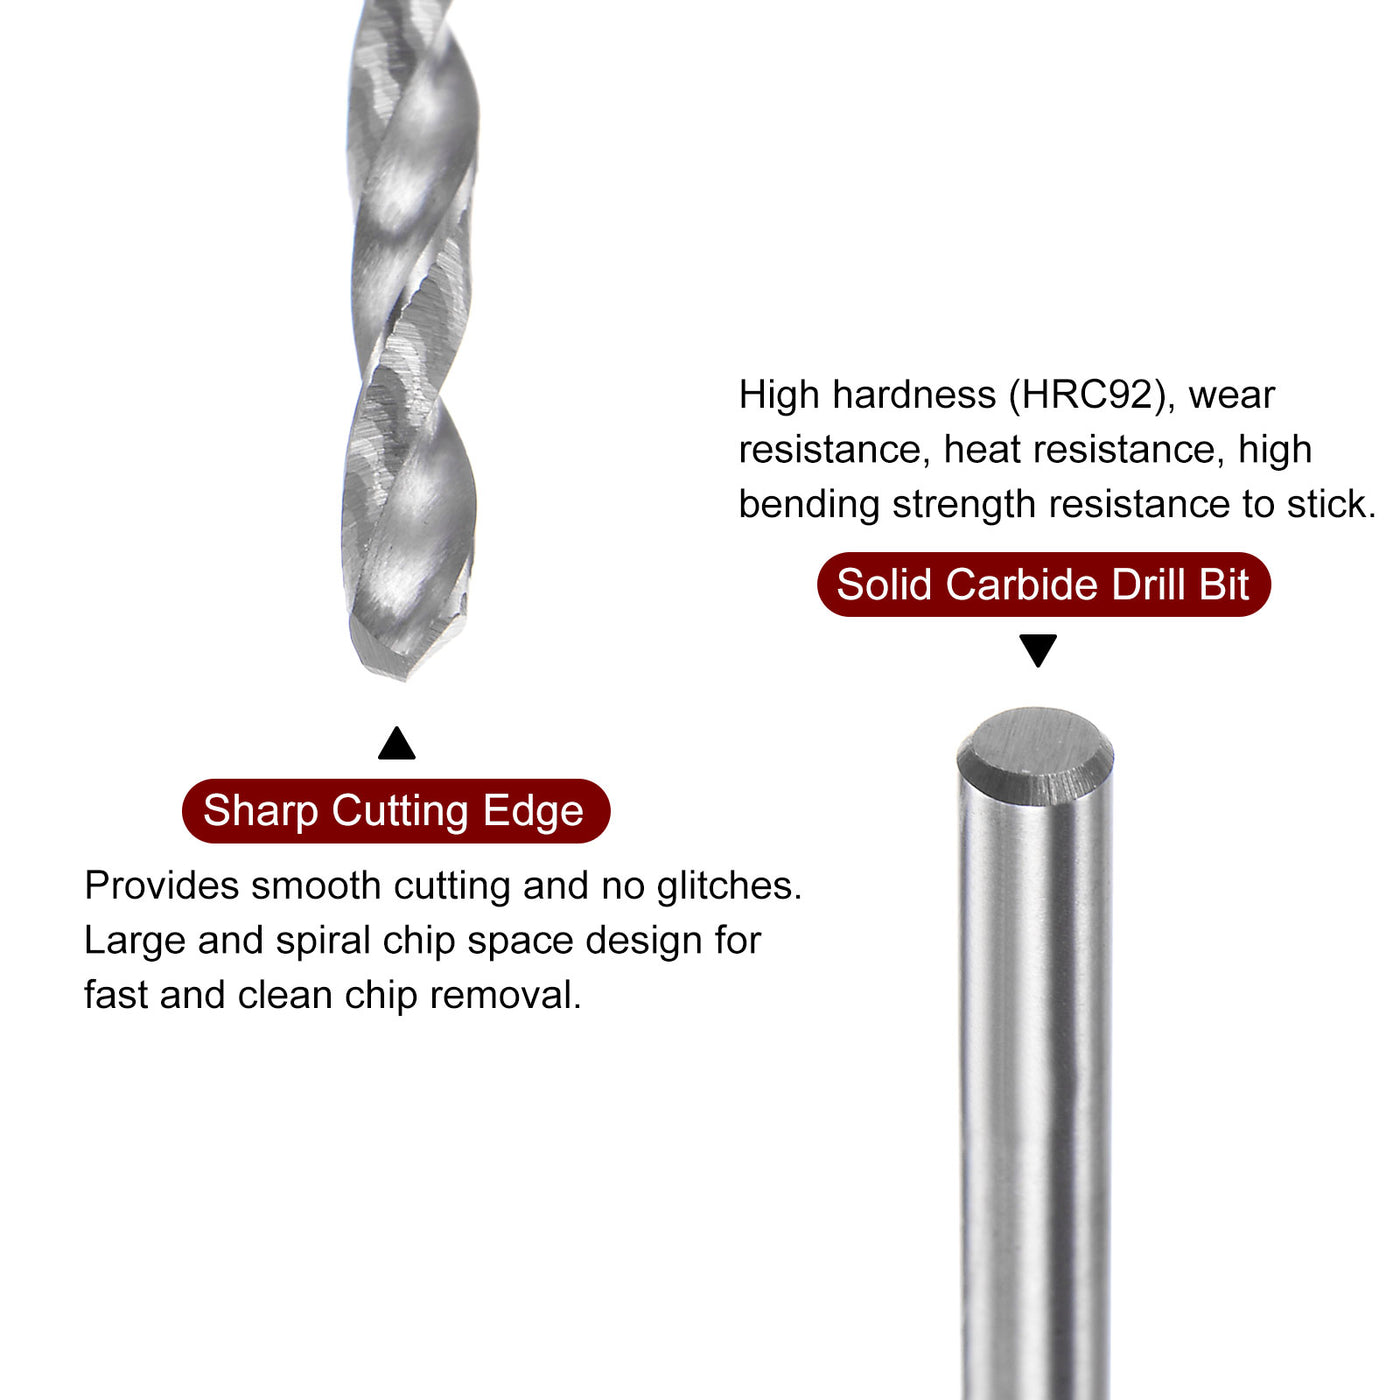 Harfington 4pcs 1.85mm C3/K10 Tungsten Carbide Precision Straight Shank Twist Drill Bit